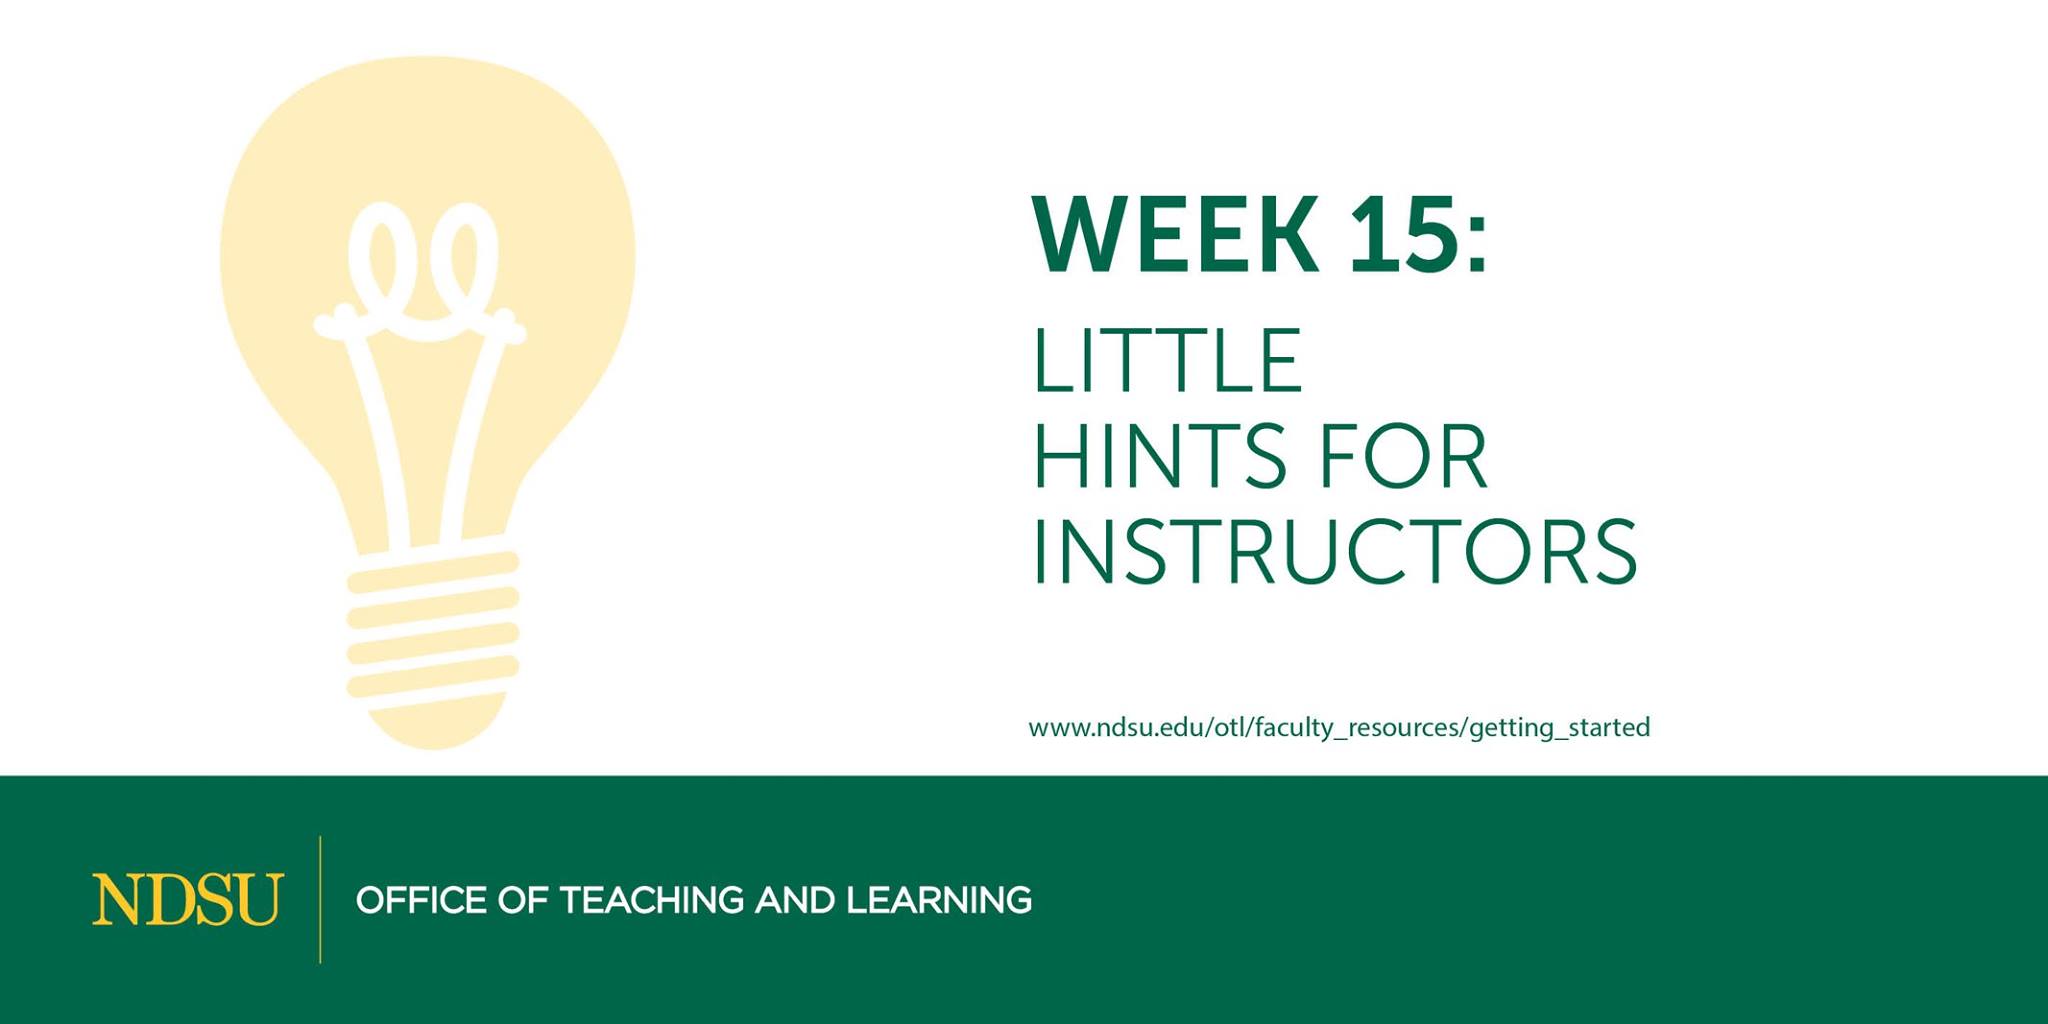 Week 15 Little Hints for Instructors